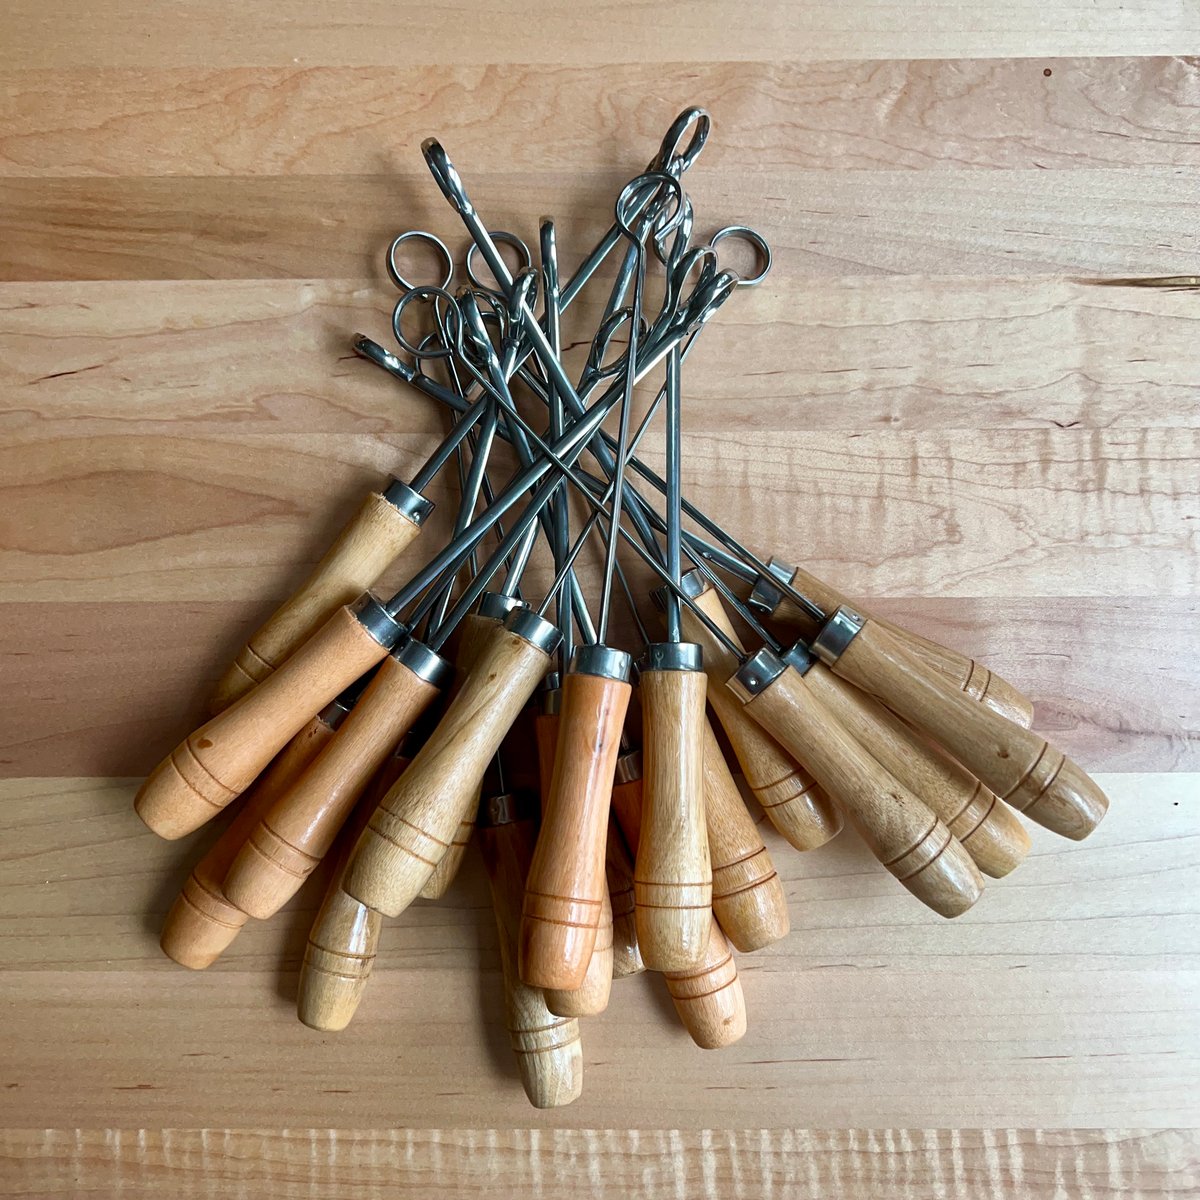  Sourdough/Bread Mixing Stir Stick Spurtle : Handmade Products